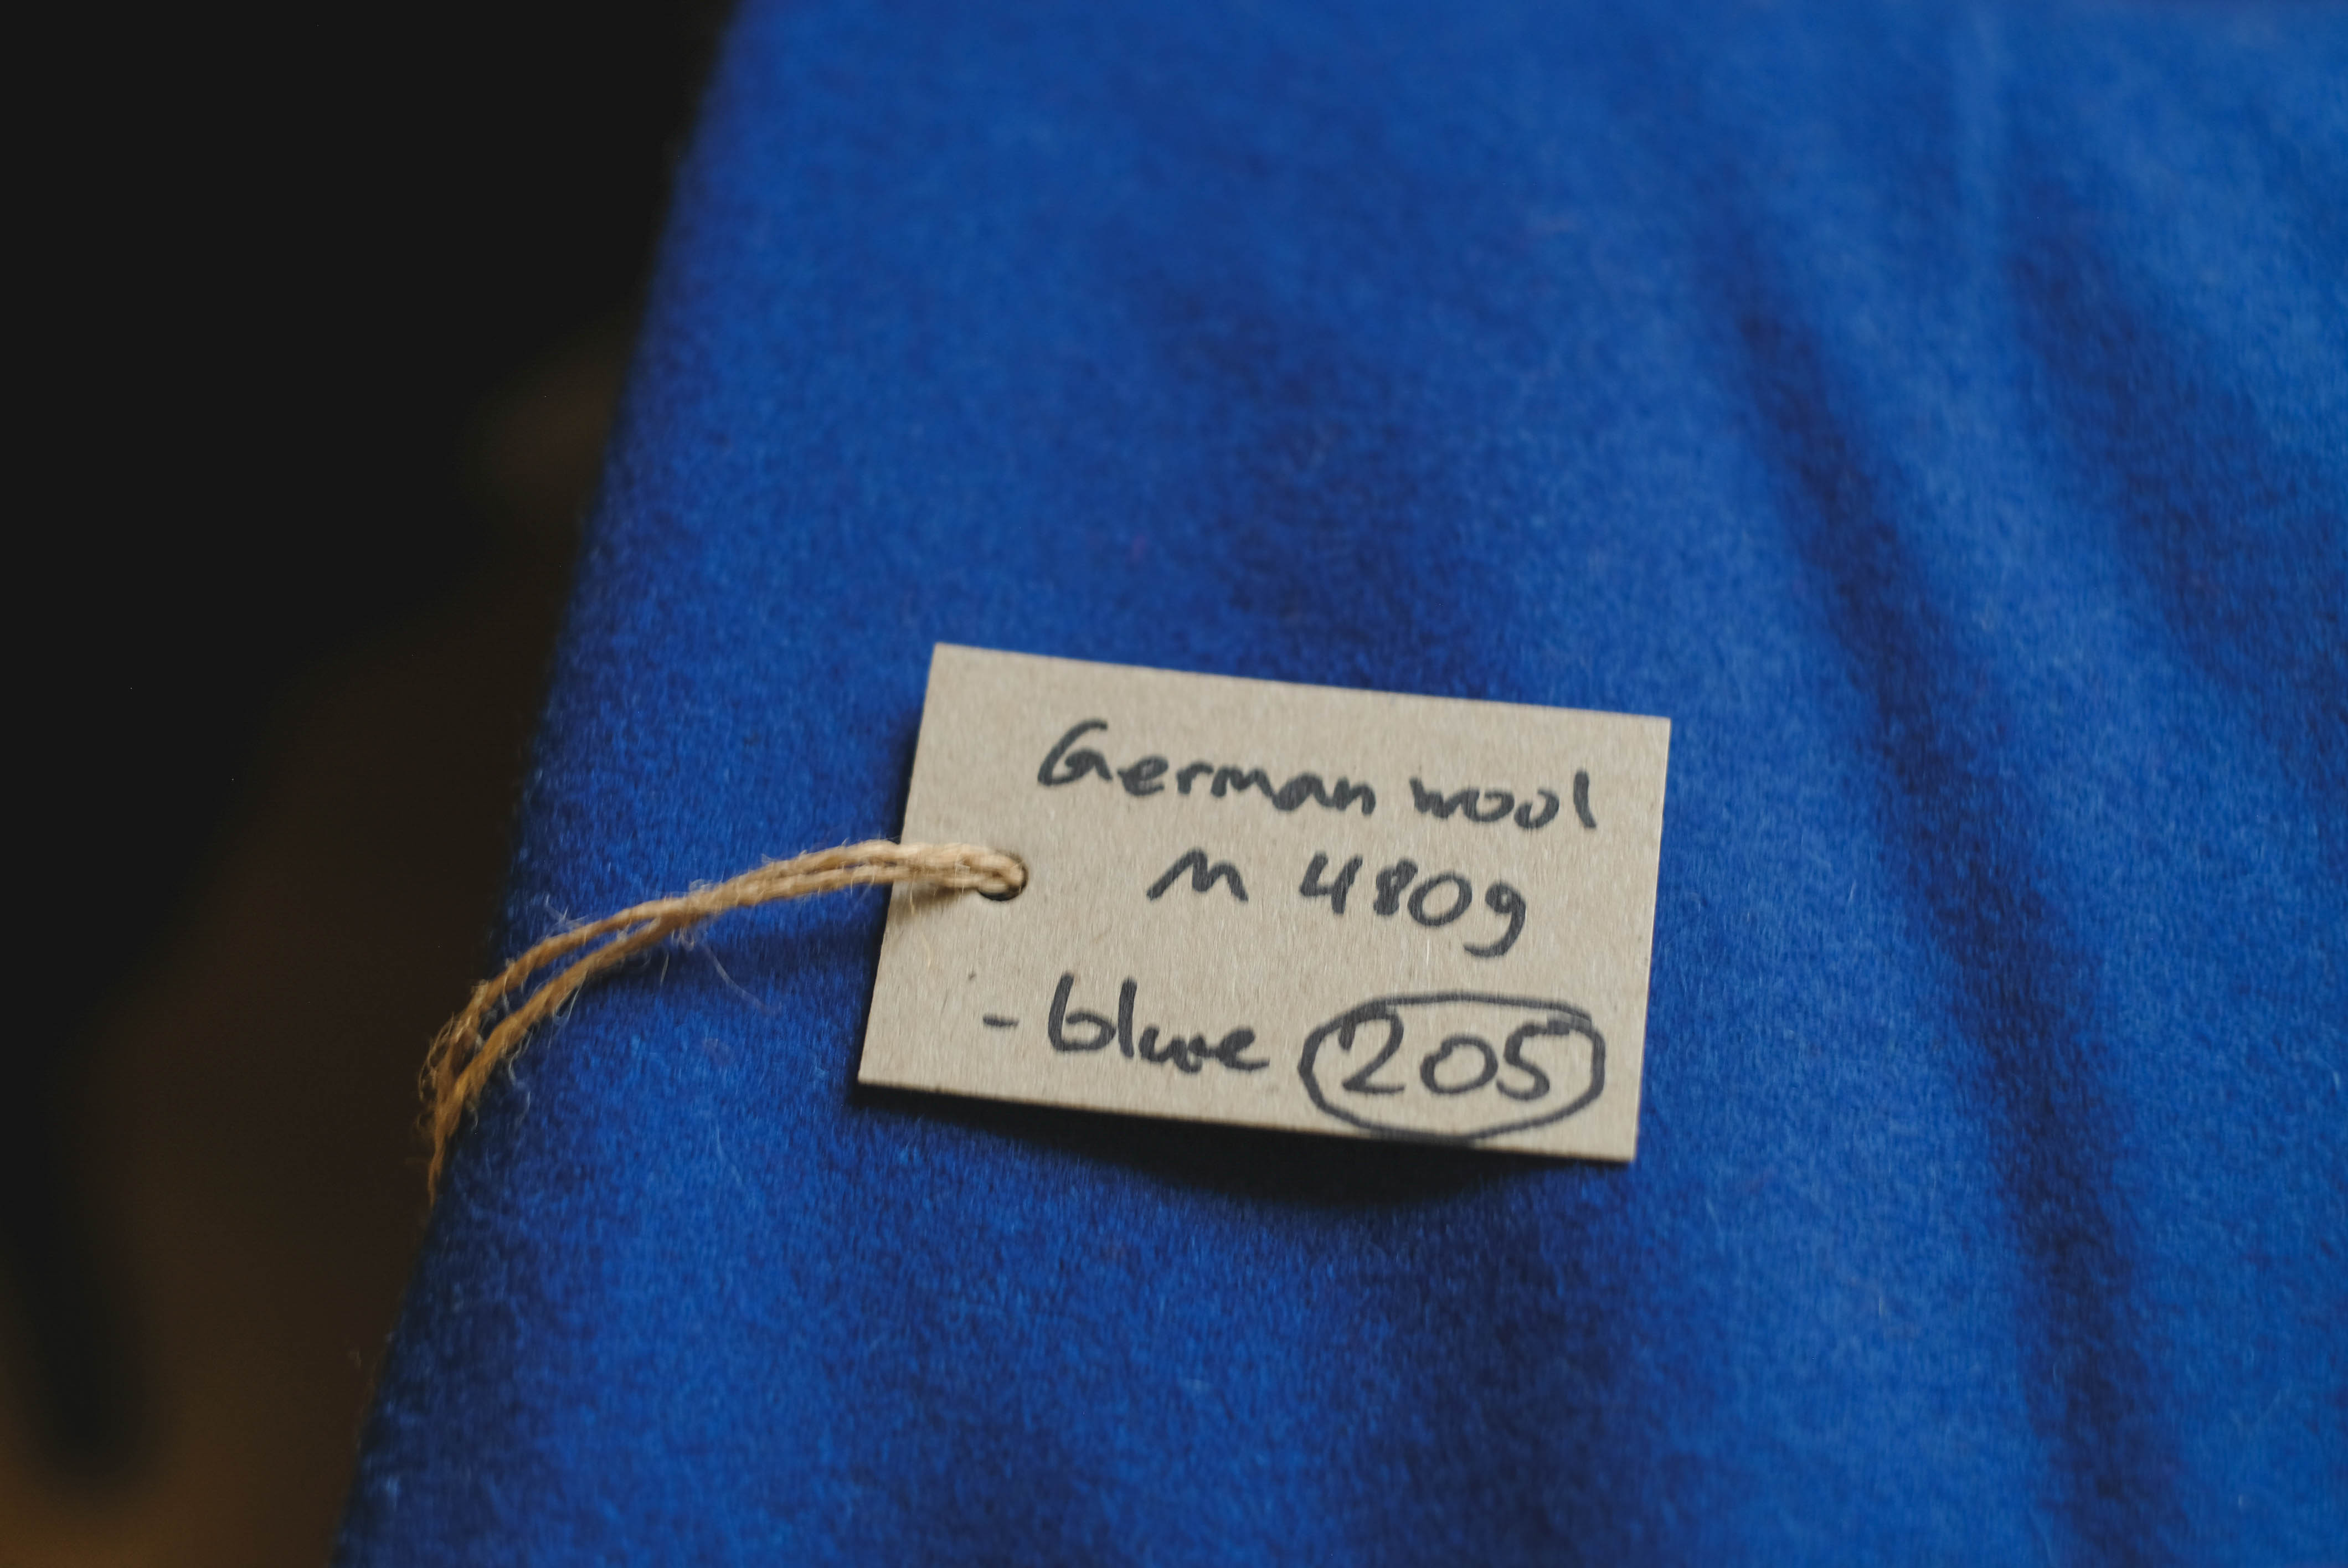 German MEDIUM wool - royal blue 205